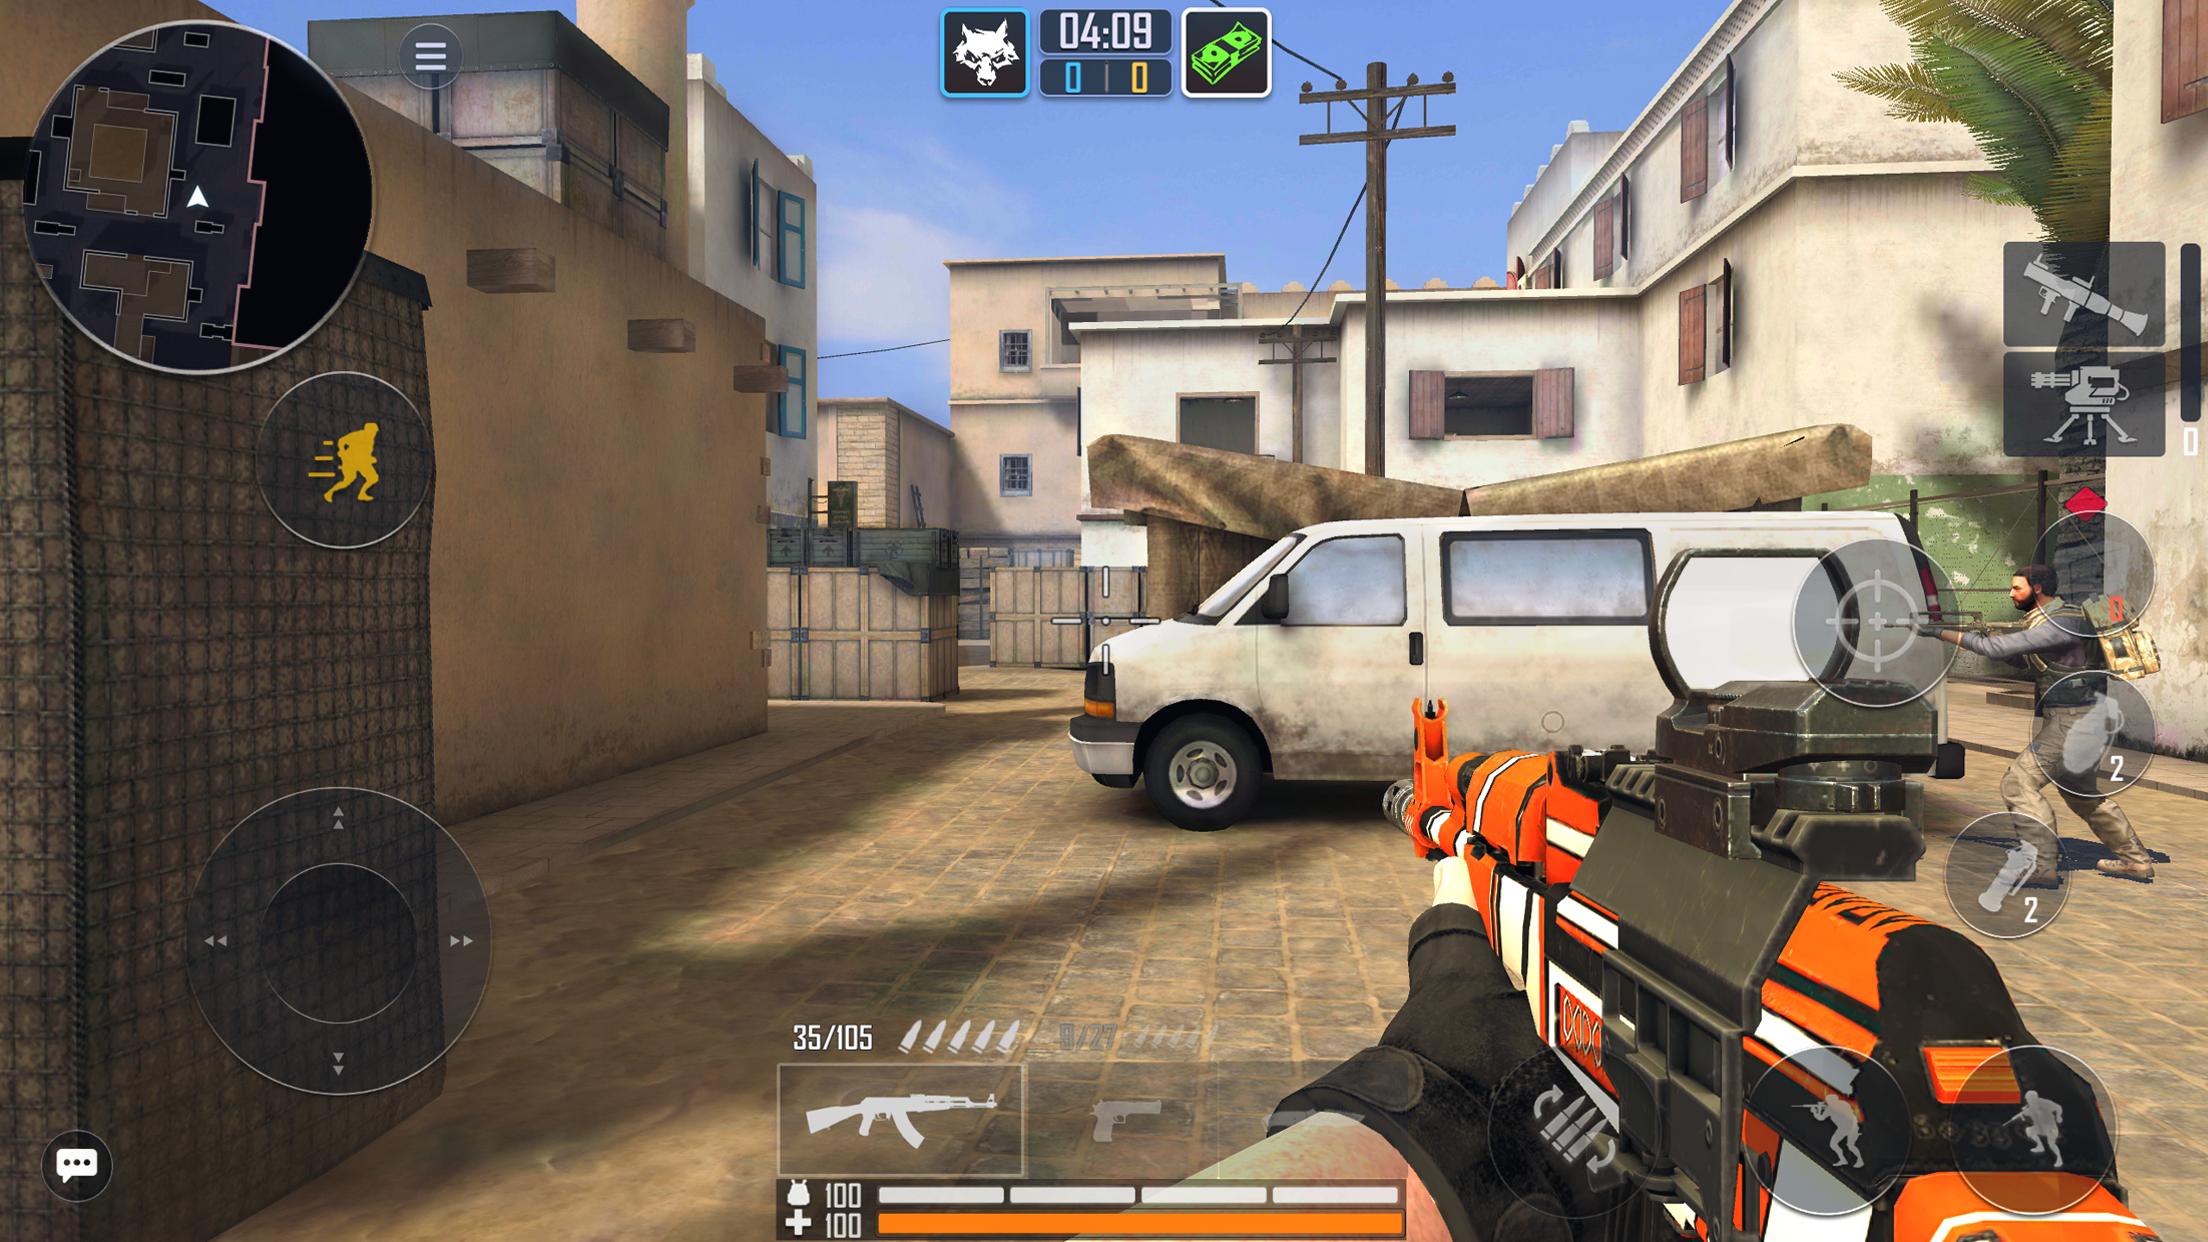 Fire Strike Online - Free Shooter FPS 1.26 Screenshot 11